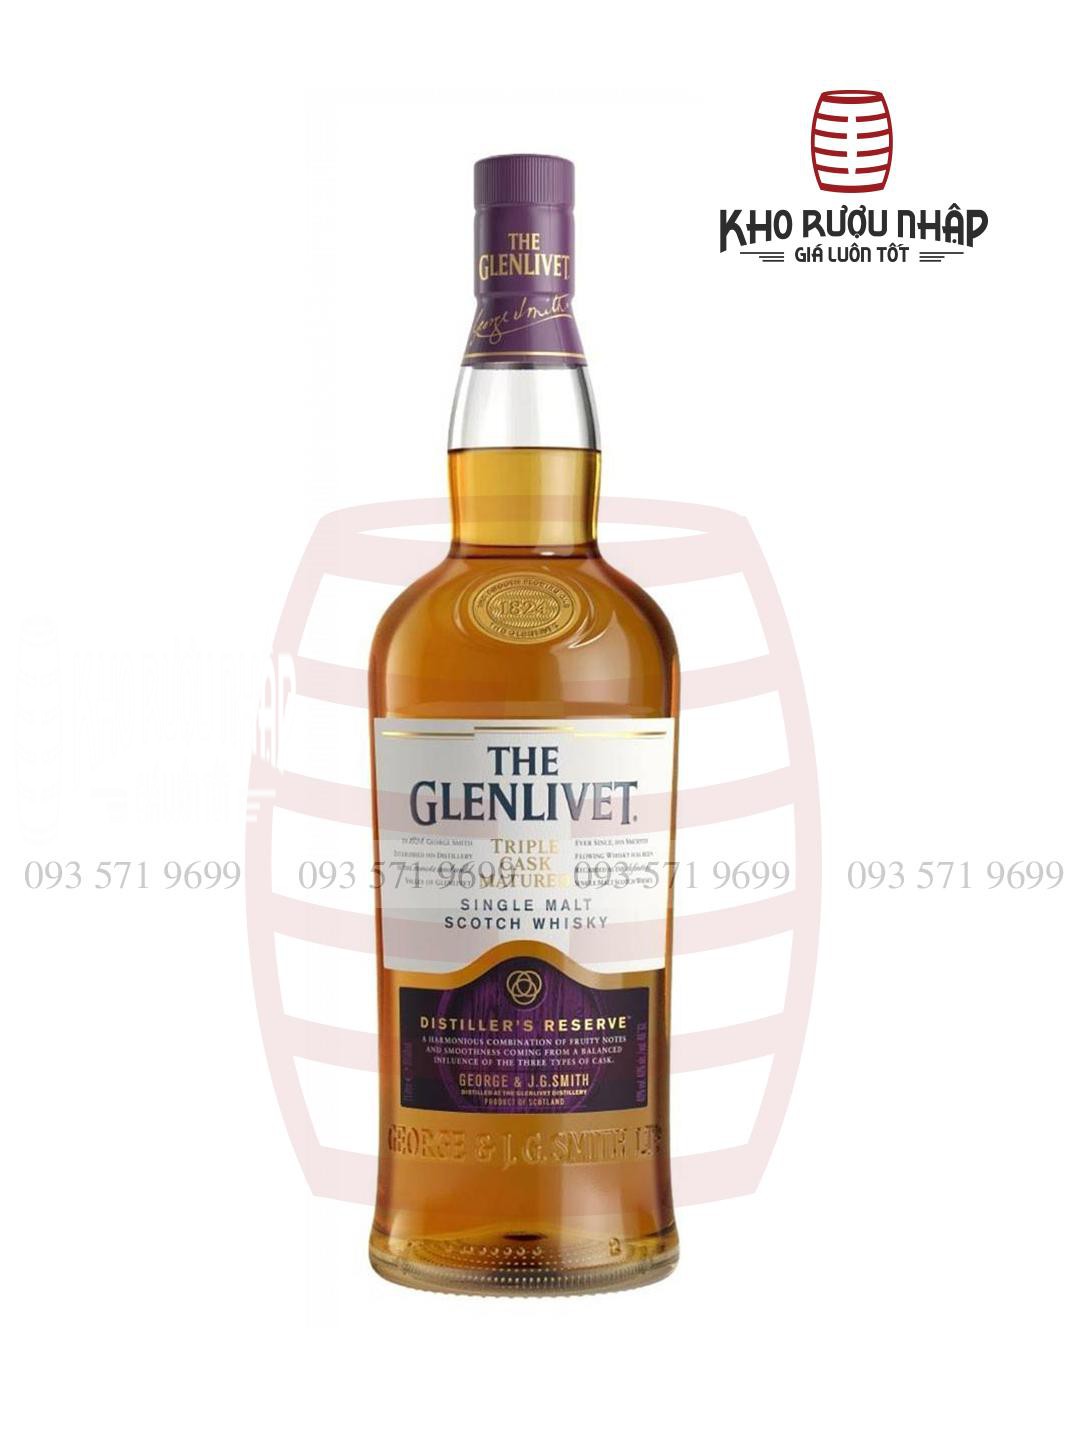 Rượu Glenlivet 1824 mã G-1824 cao cấp 750ml